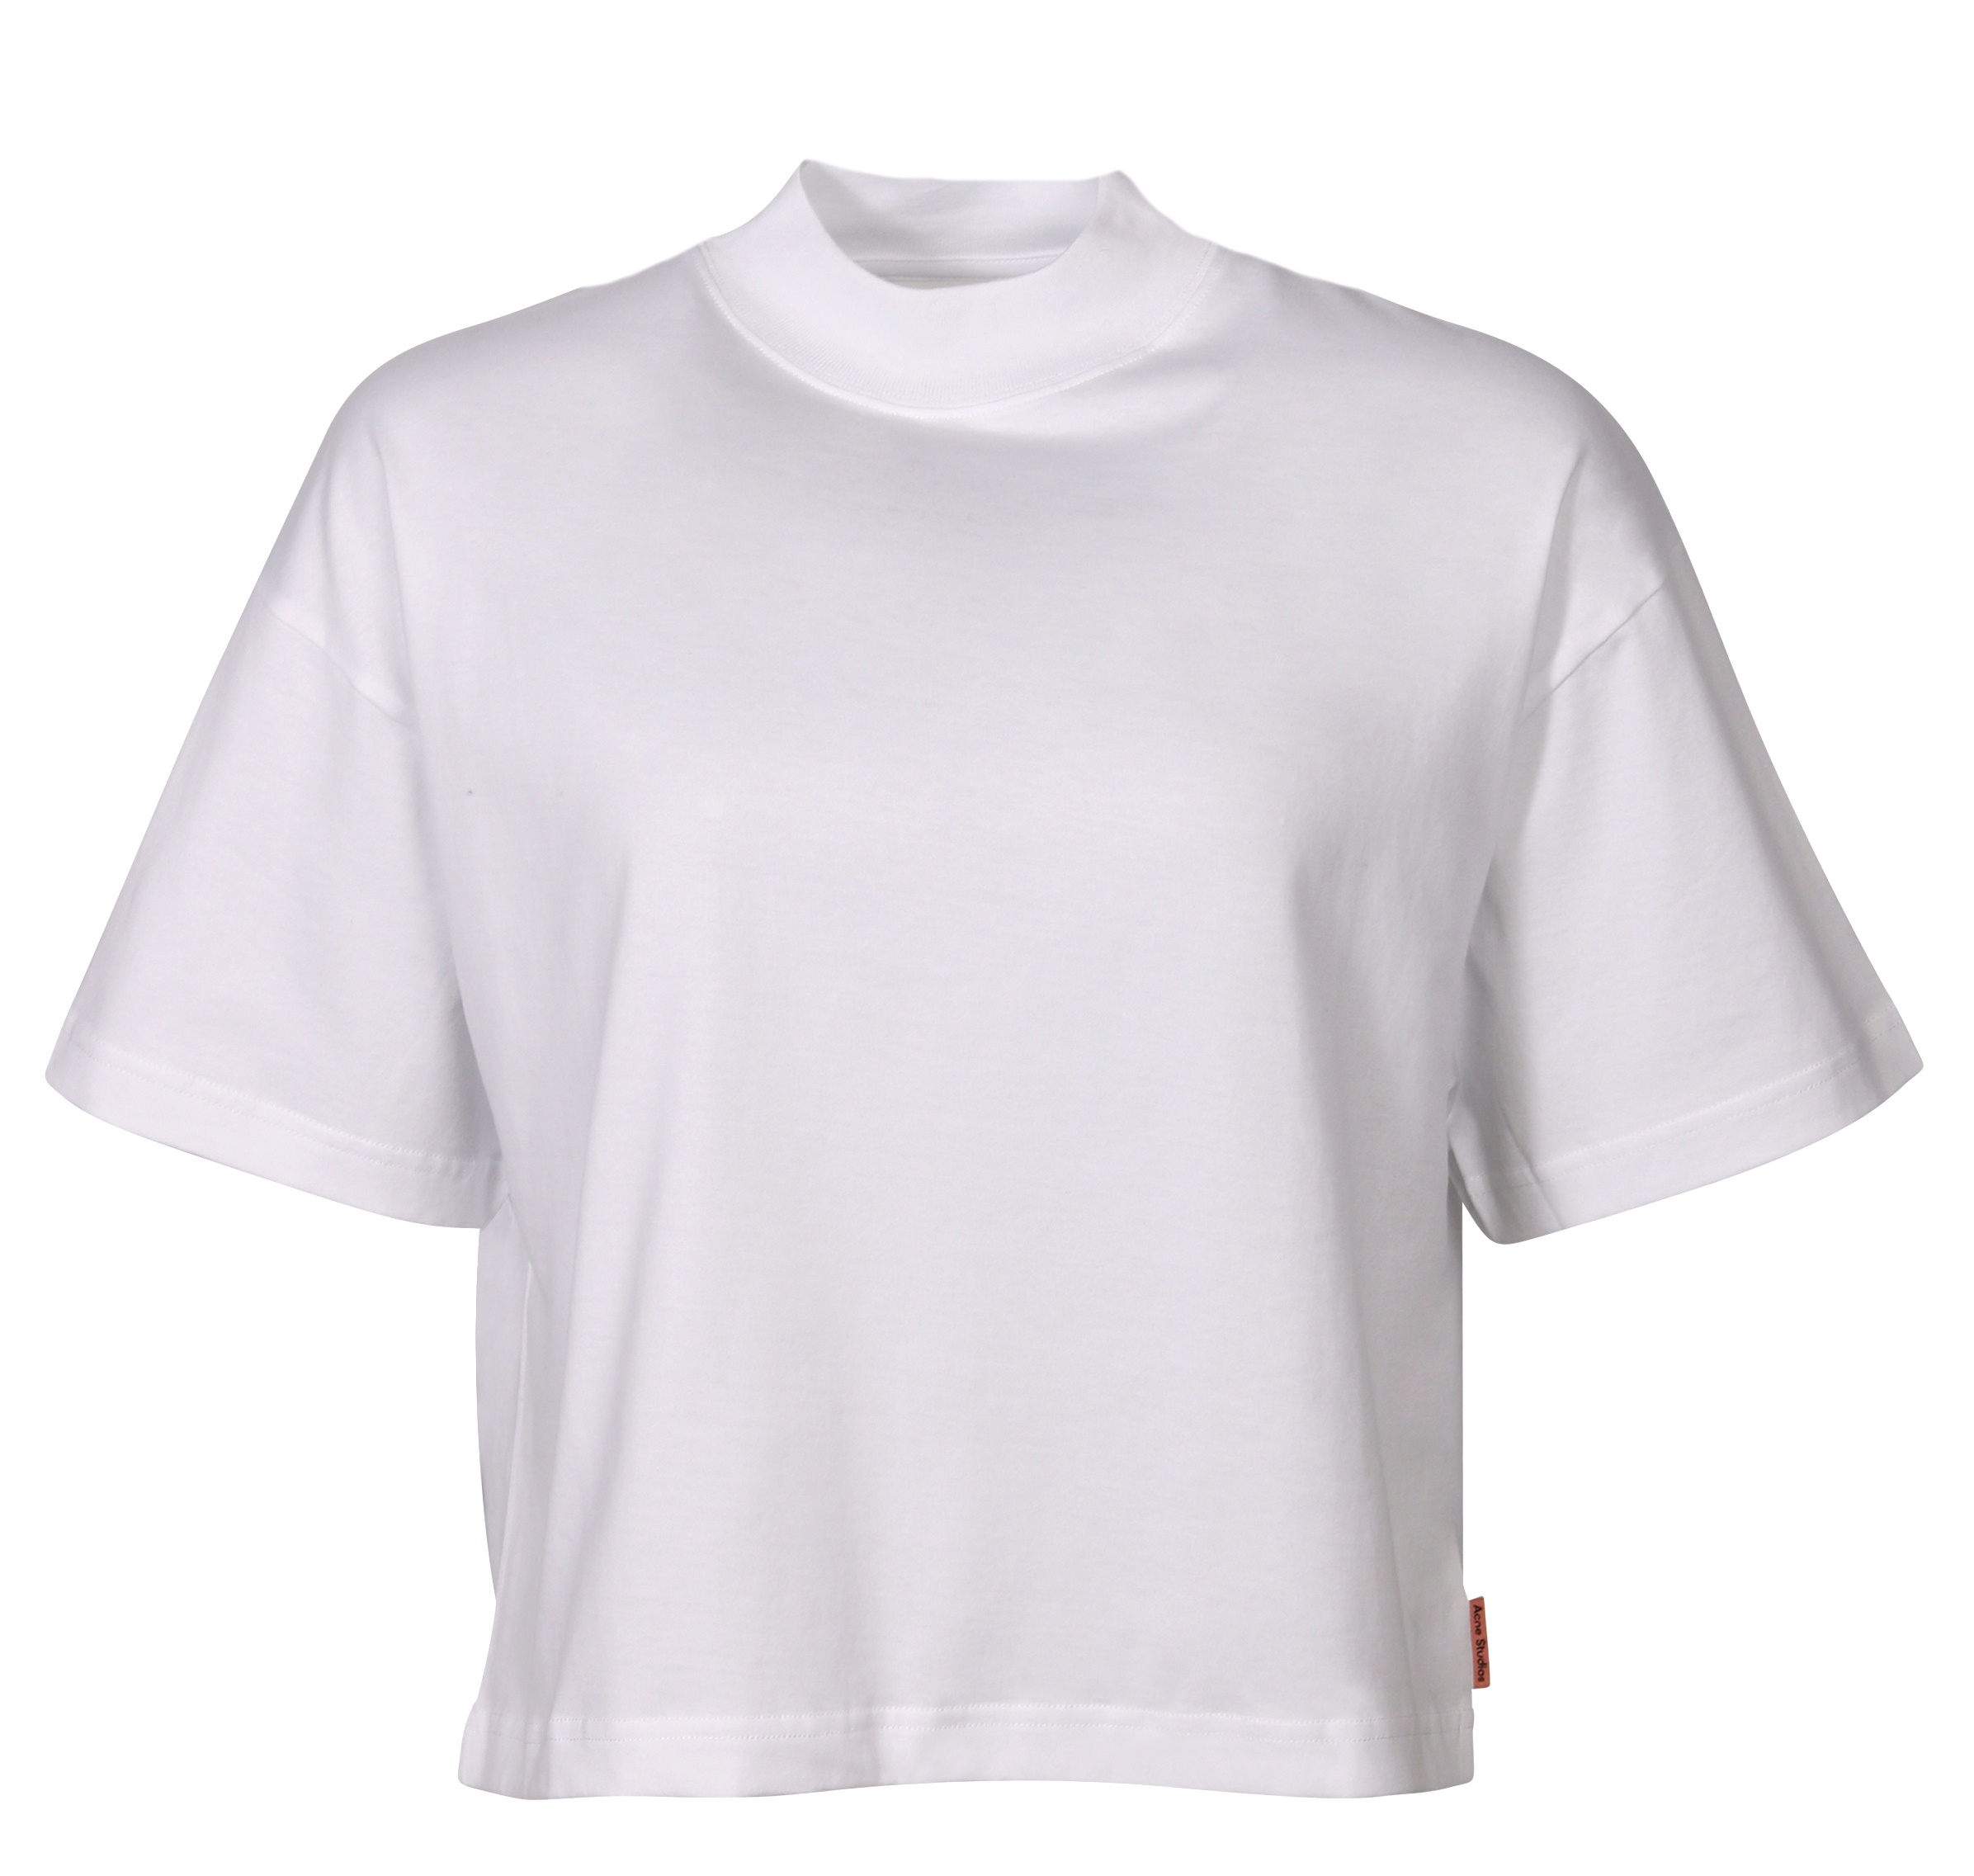 Acne Studios Cropped Turtle Neck T-Shirt Emirka White